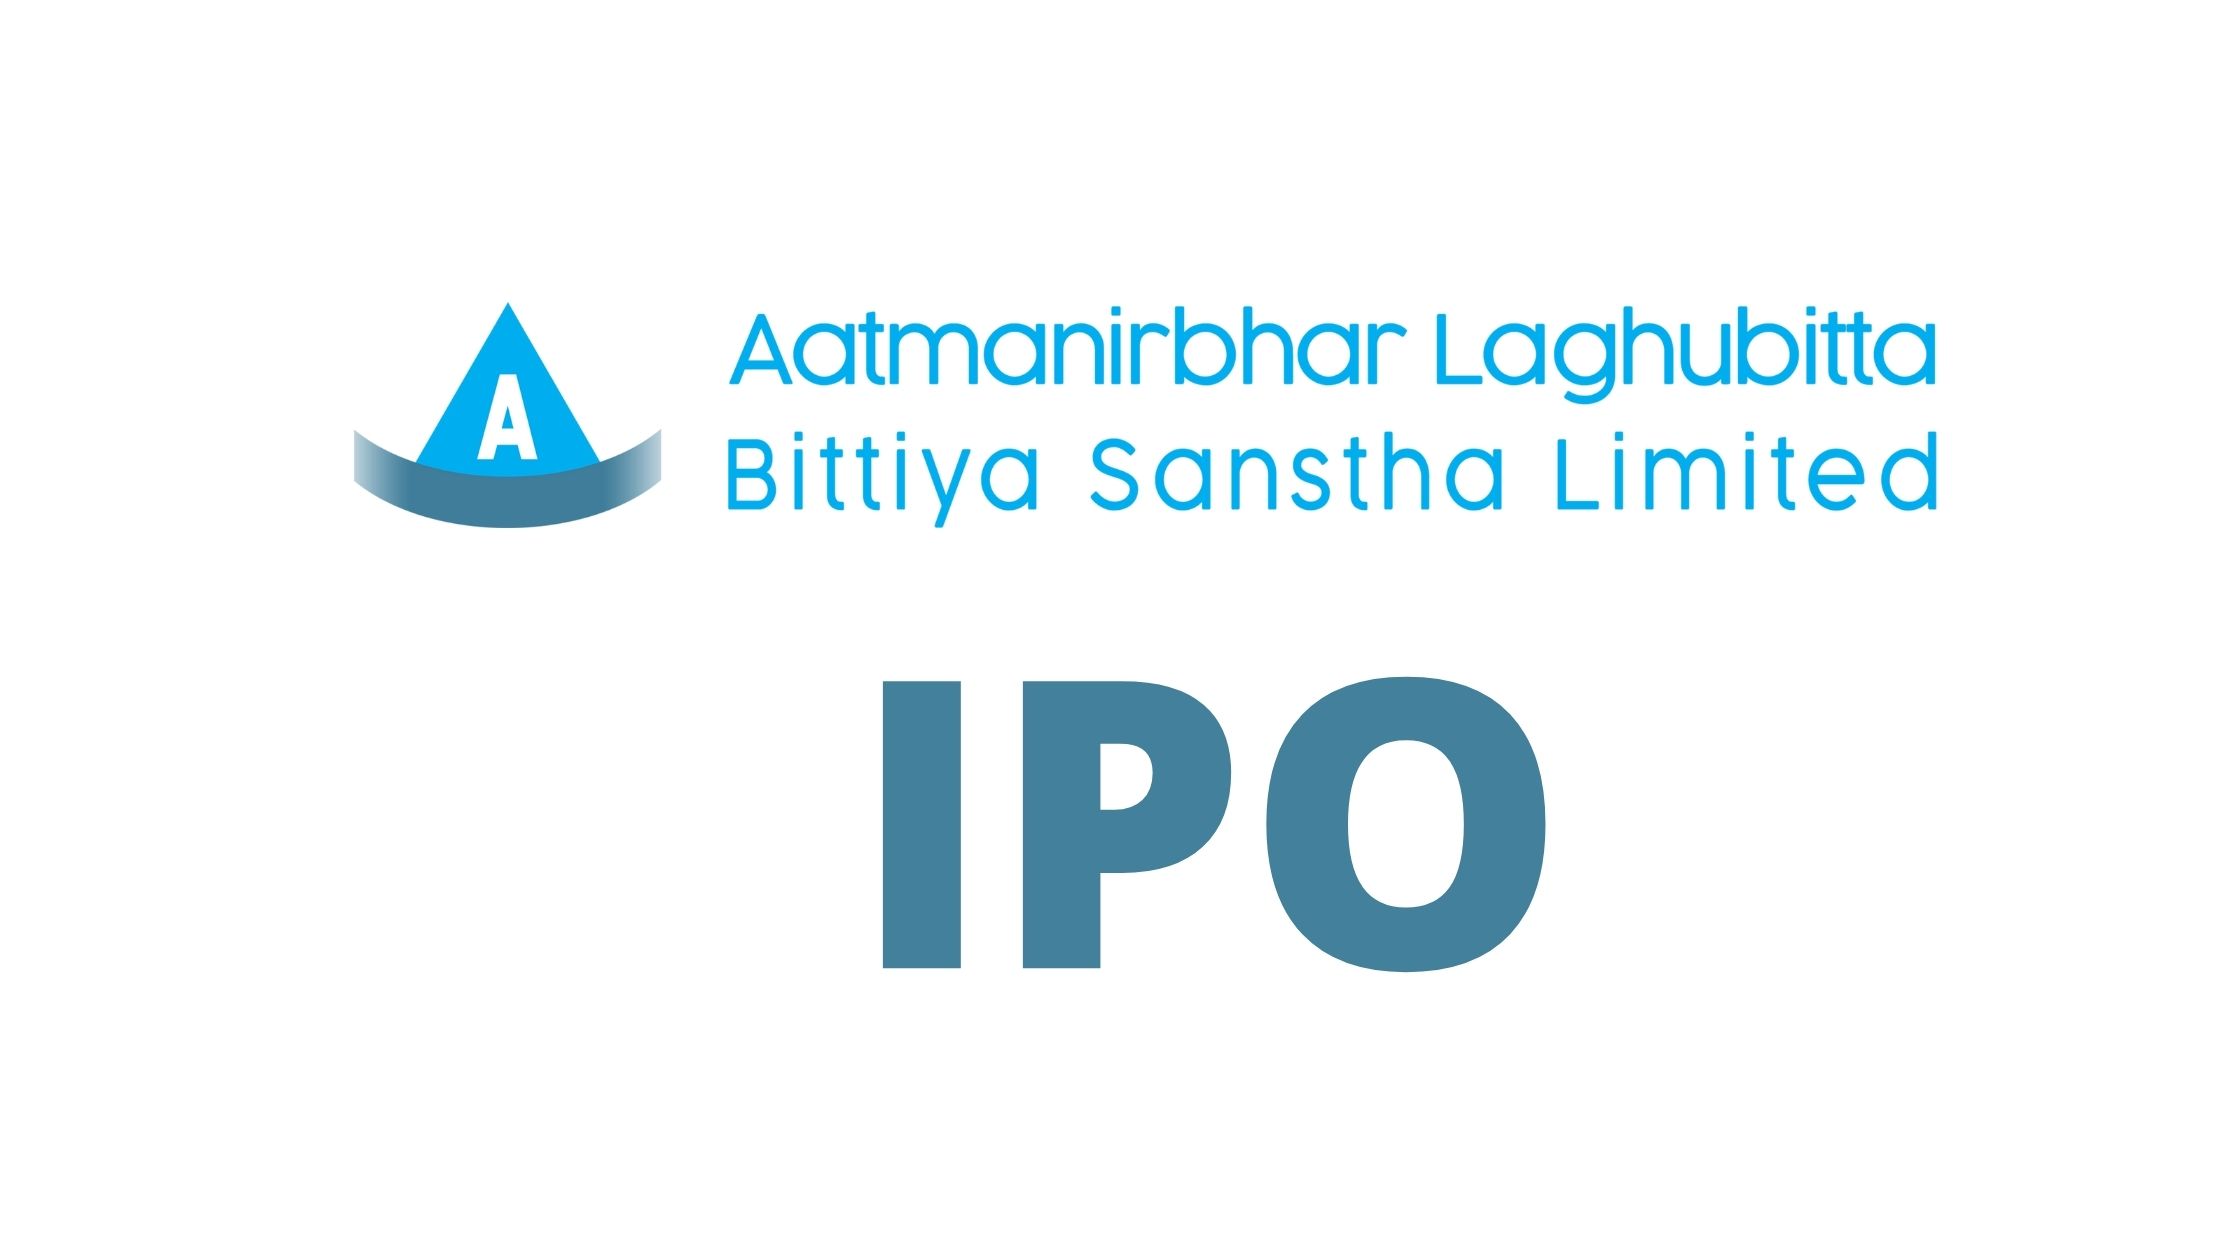 Aatmanirbhar Laghubitta Bittiya Sanstha Limited To Issue IPO